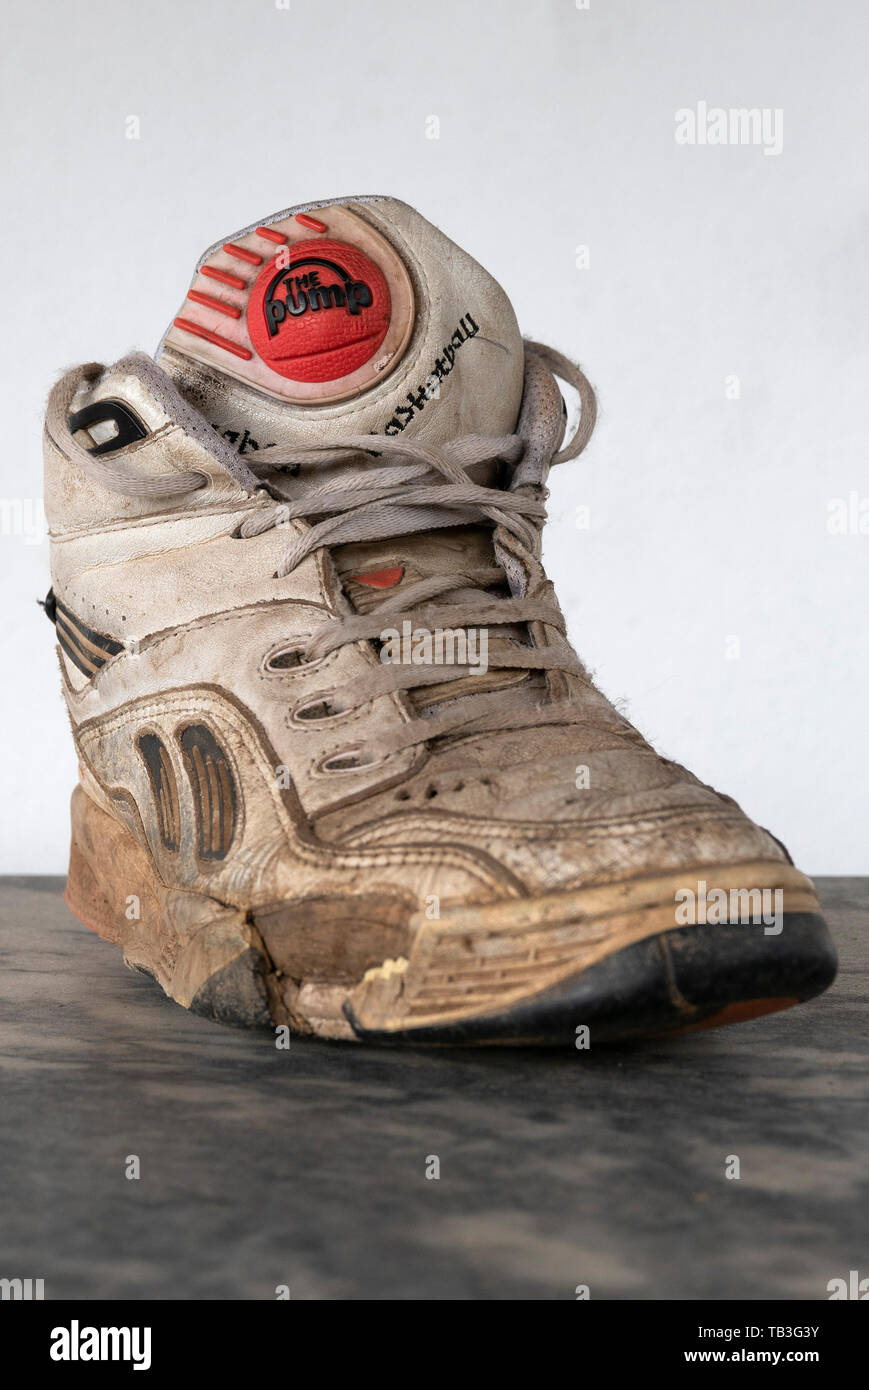 Old worn 1990s Reebok Pump white basketball sneaker Stock Photo - Alamy